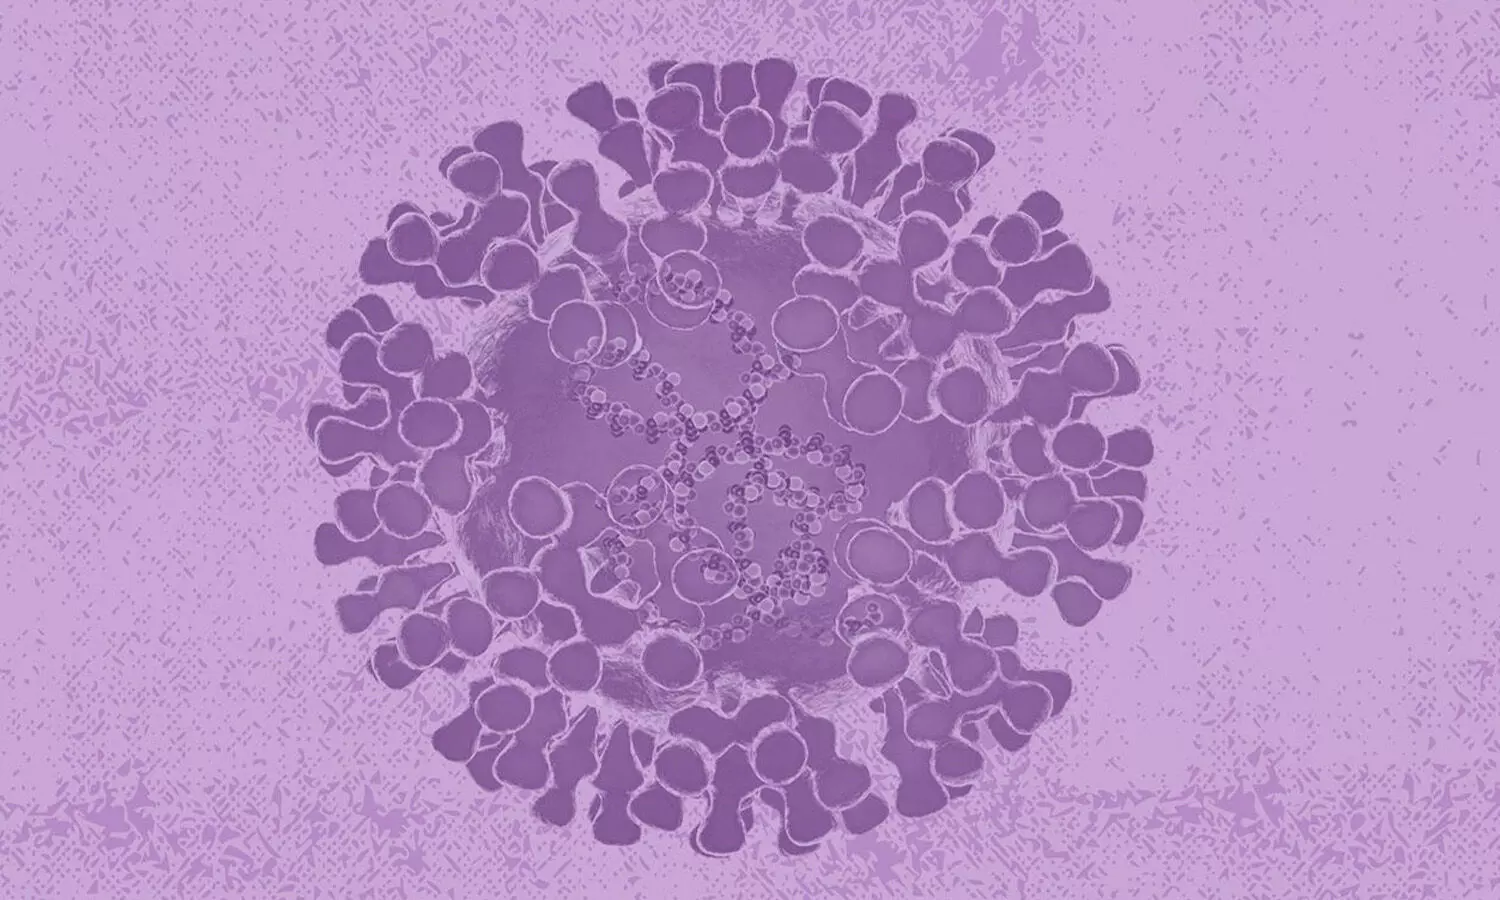 Monkeypox outbreak: New Zealand reports first case of monkeypox virus